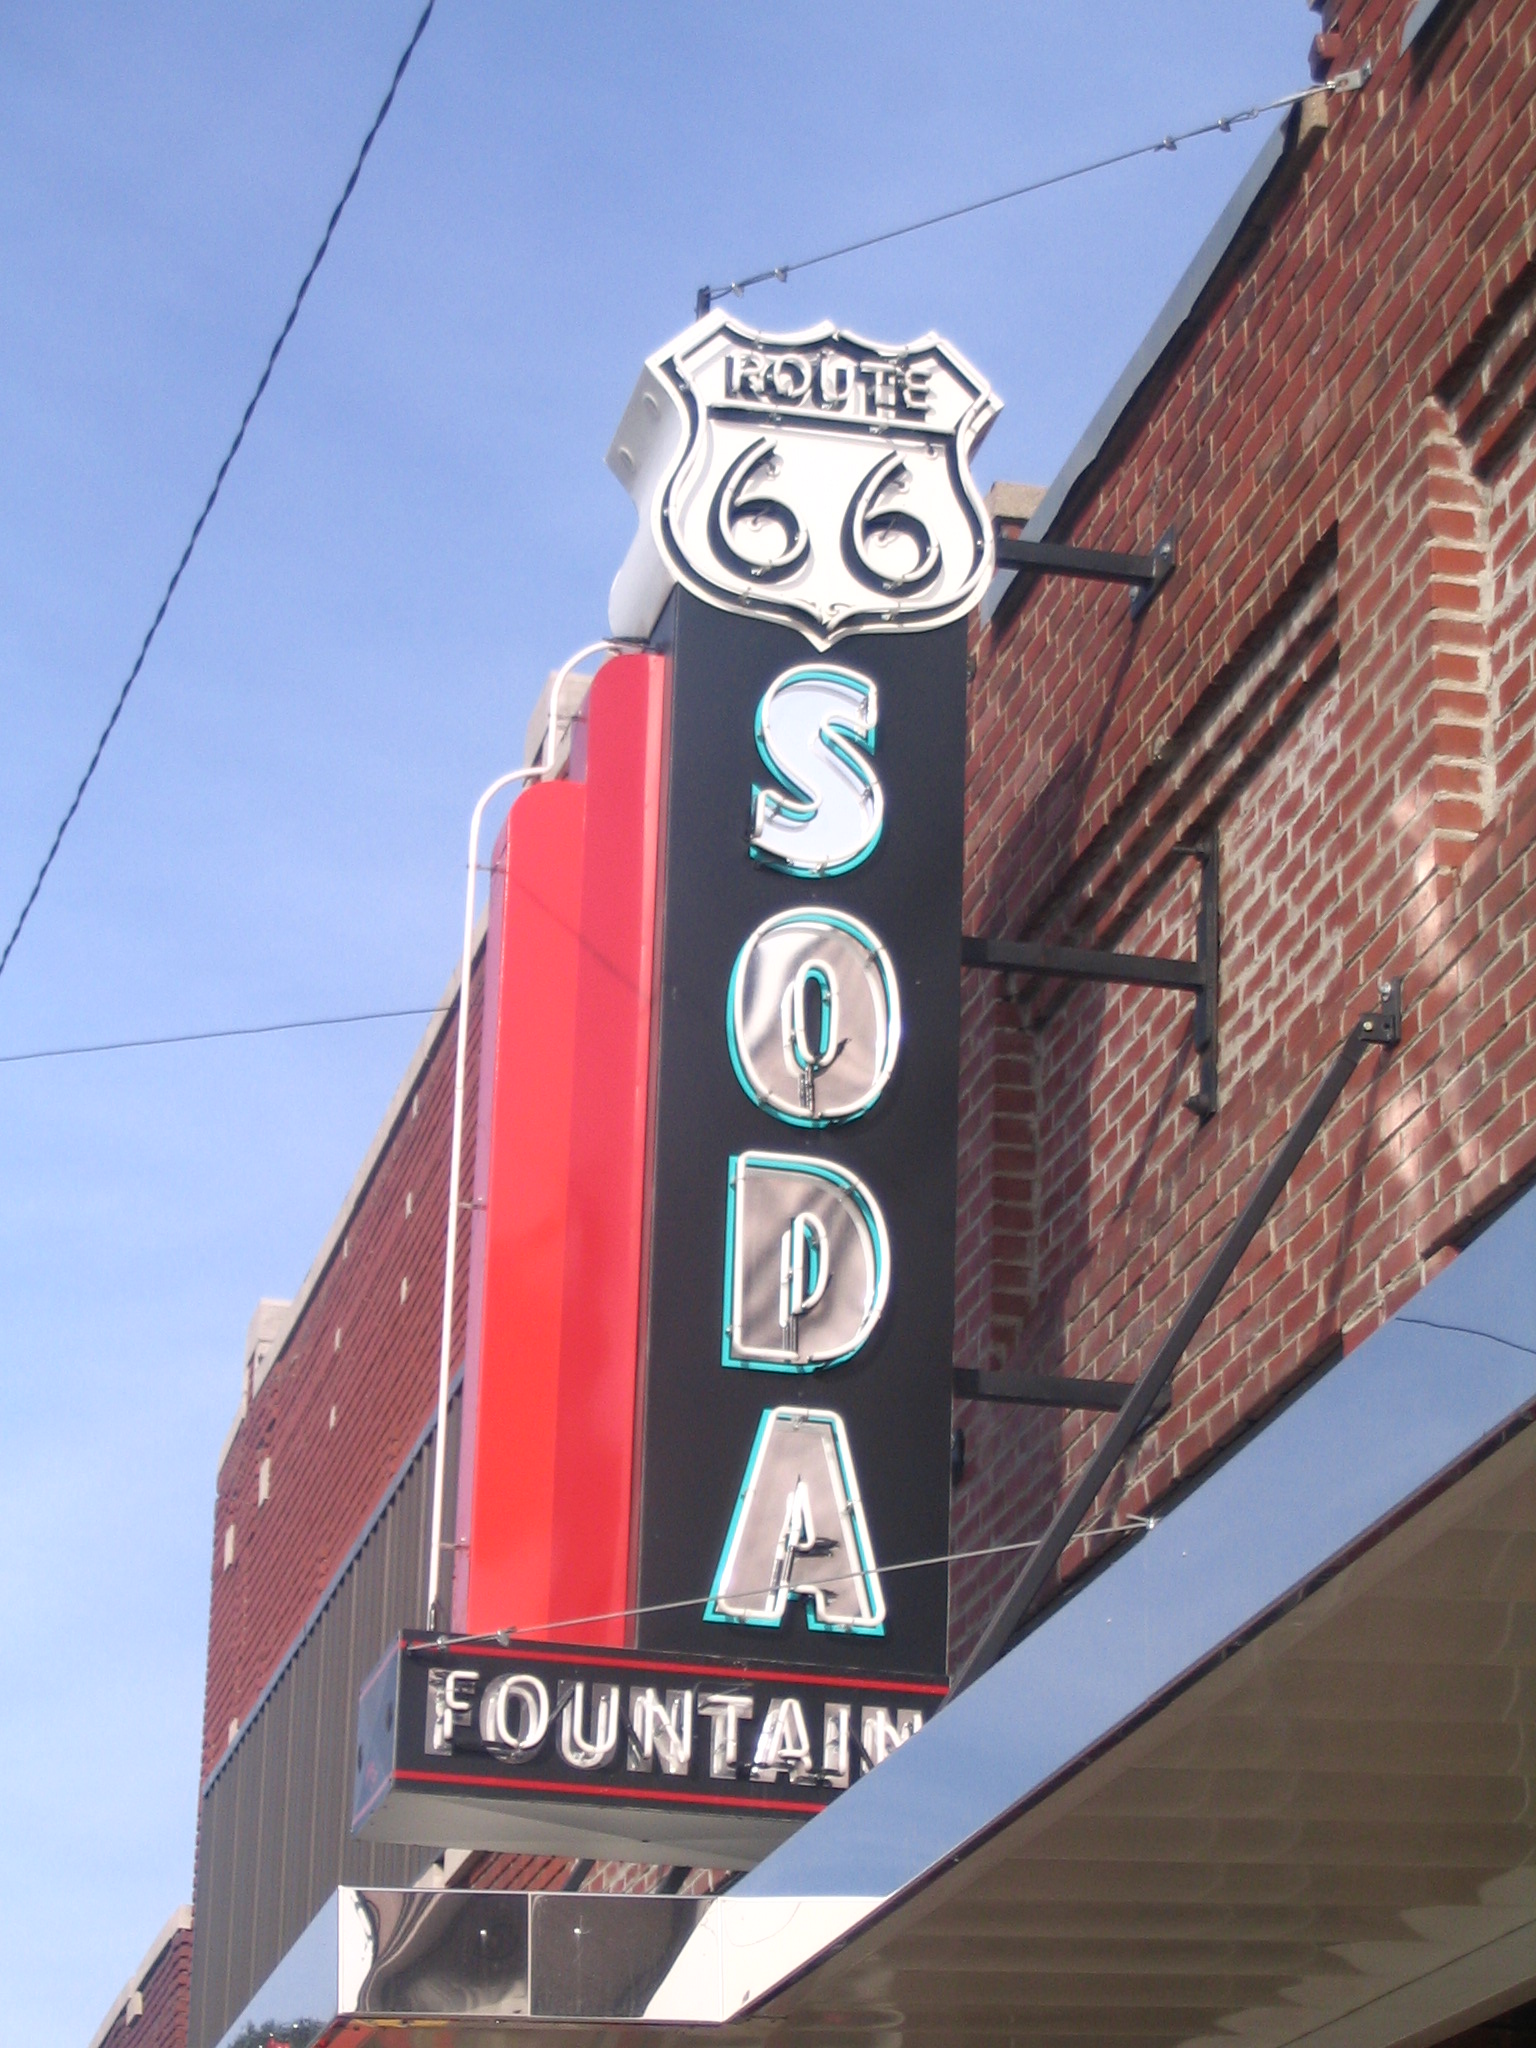 Soda fountain - Wikipedia